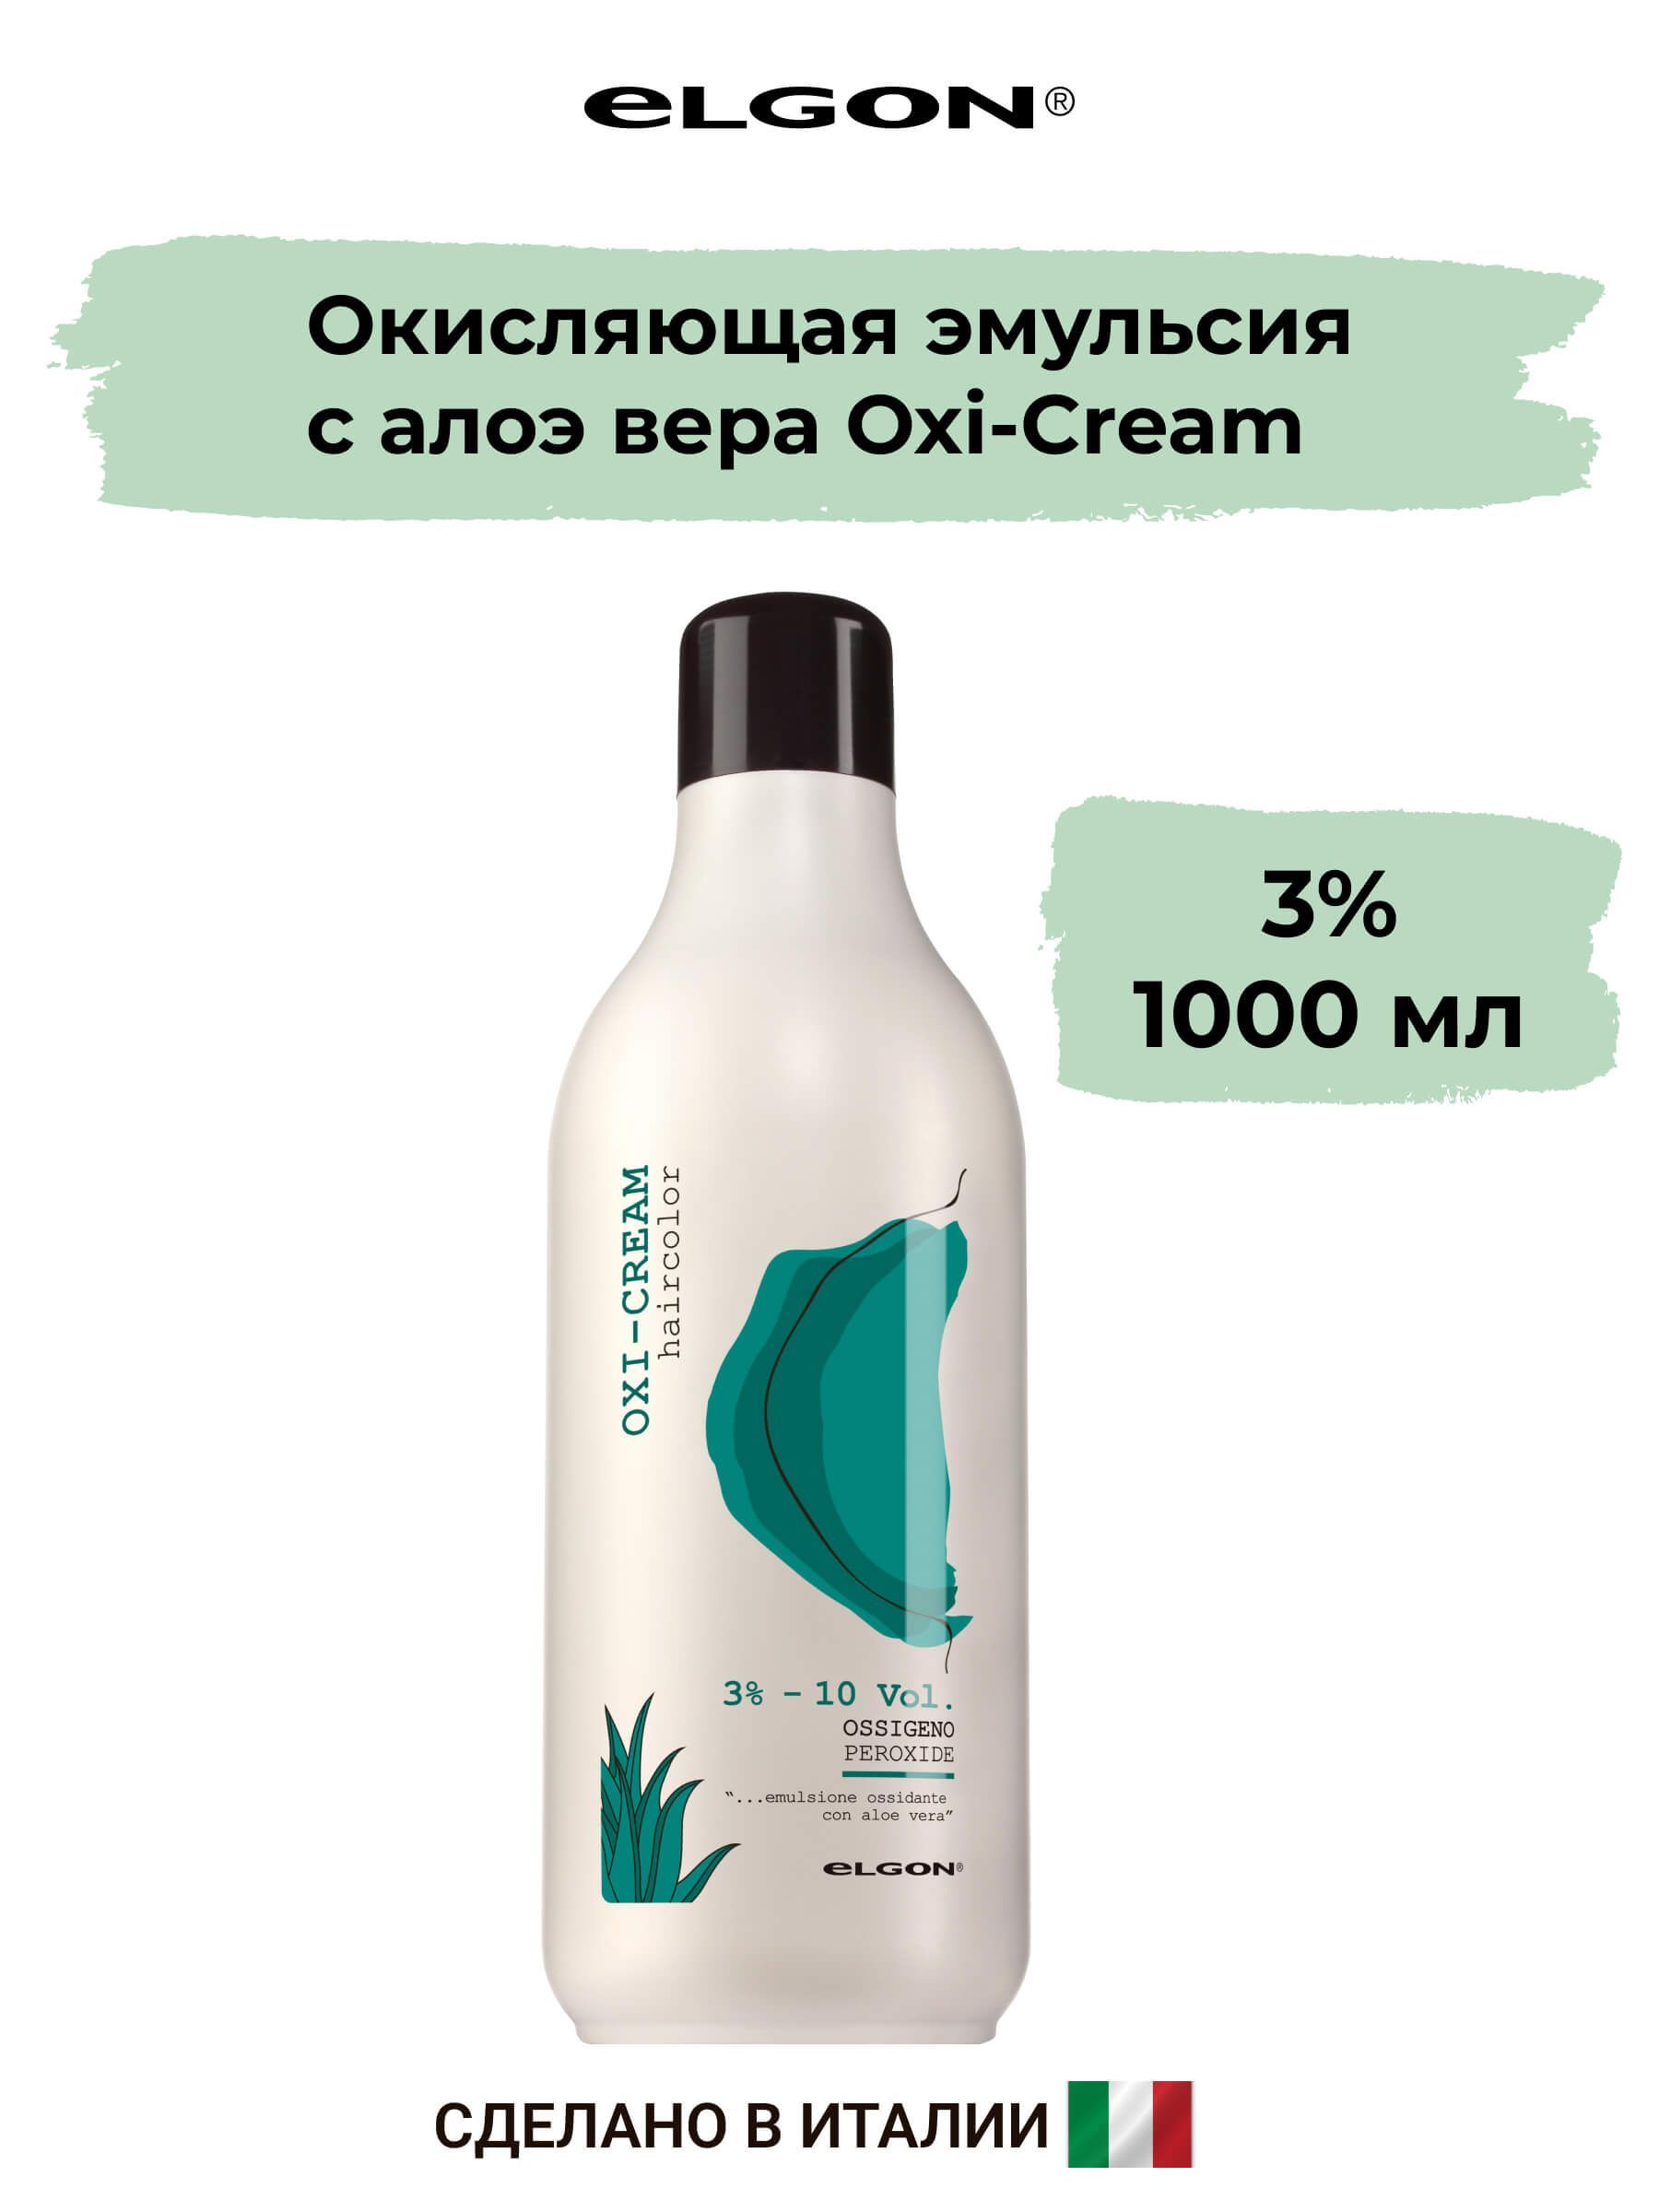 ElgonОкисляющаяэмульсиясалоэвераOxi-Cream3%,1000мл.